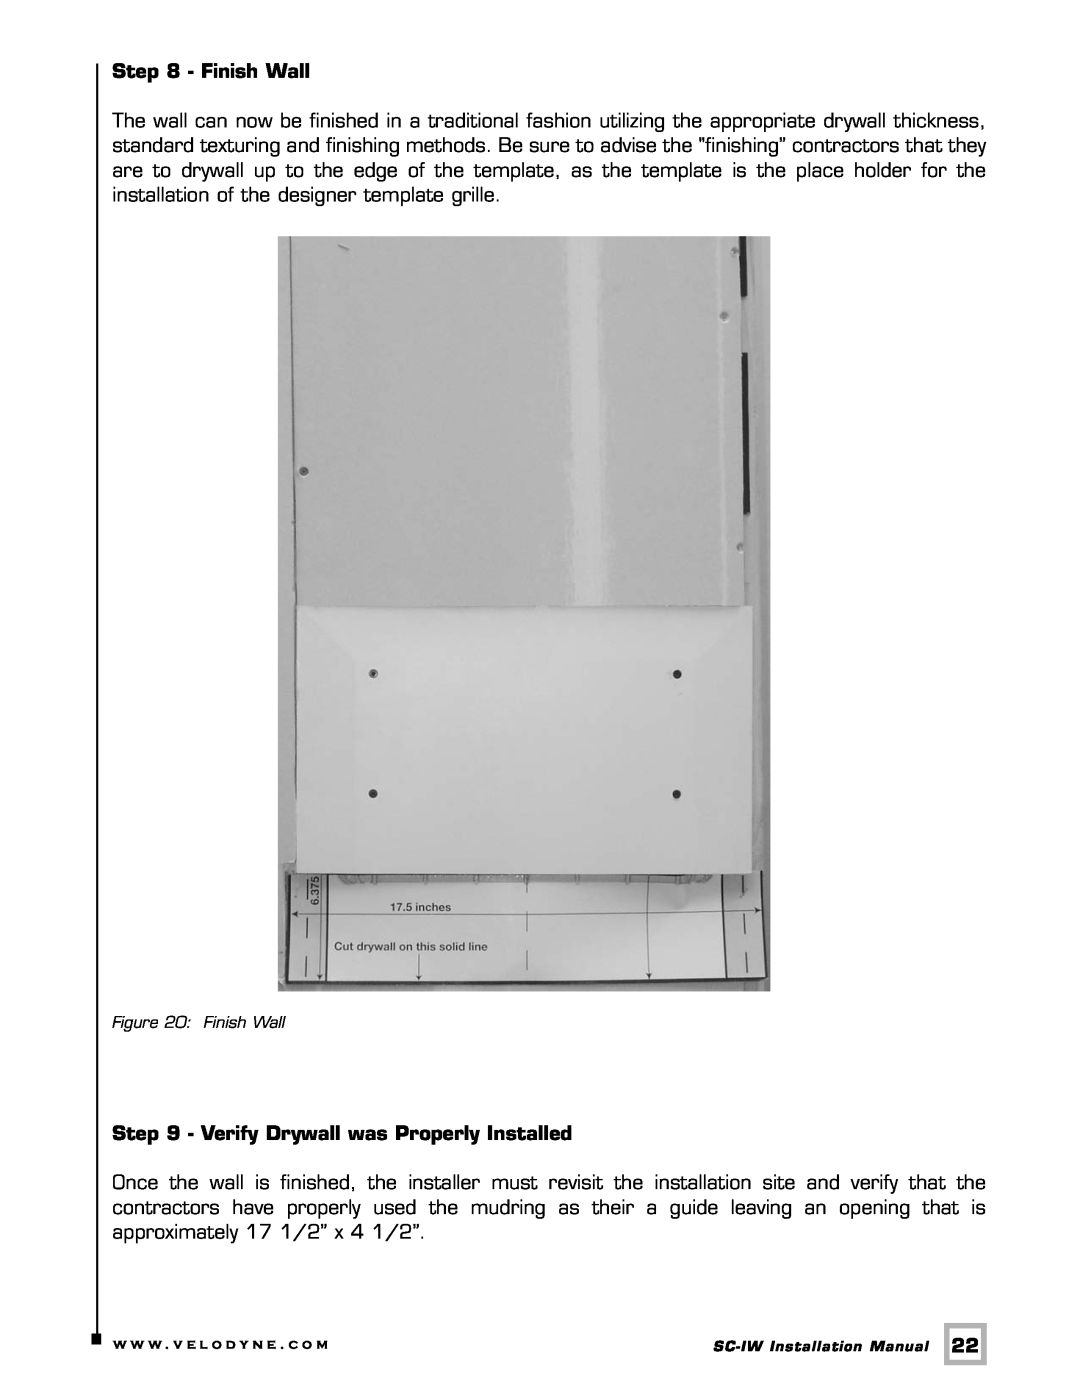 Velodyne Acoustics SC-IW installation manual Finish Wall, Verify Drywall was Properly Installed 